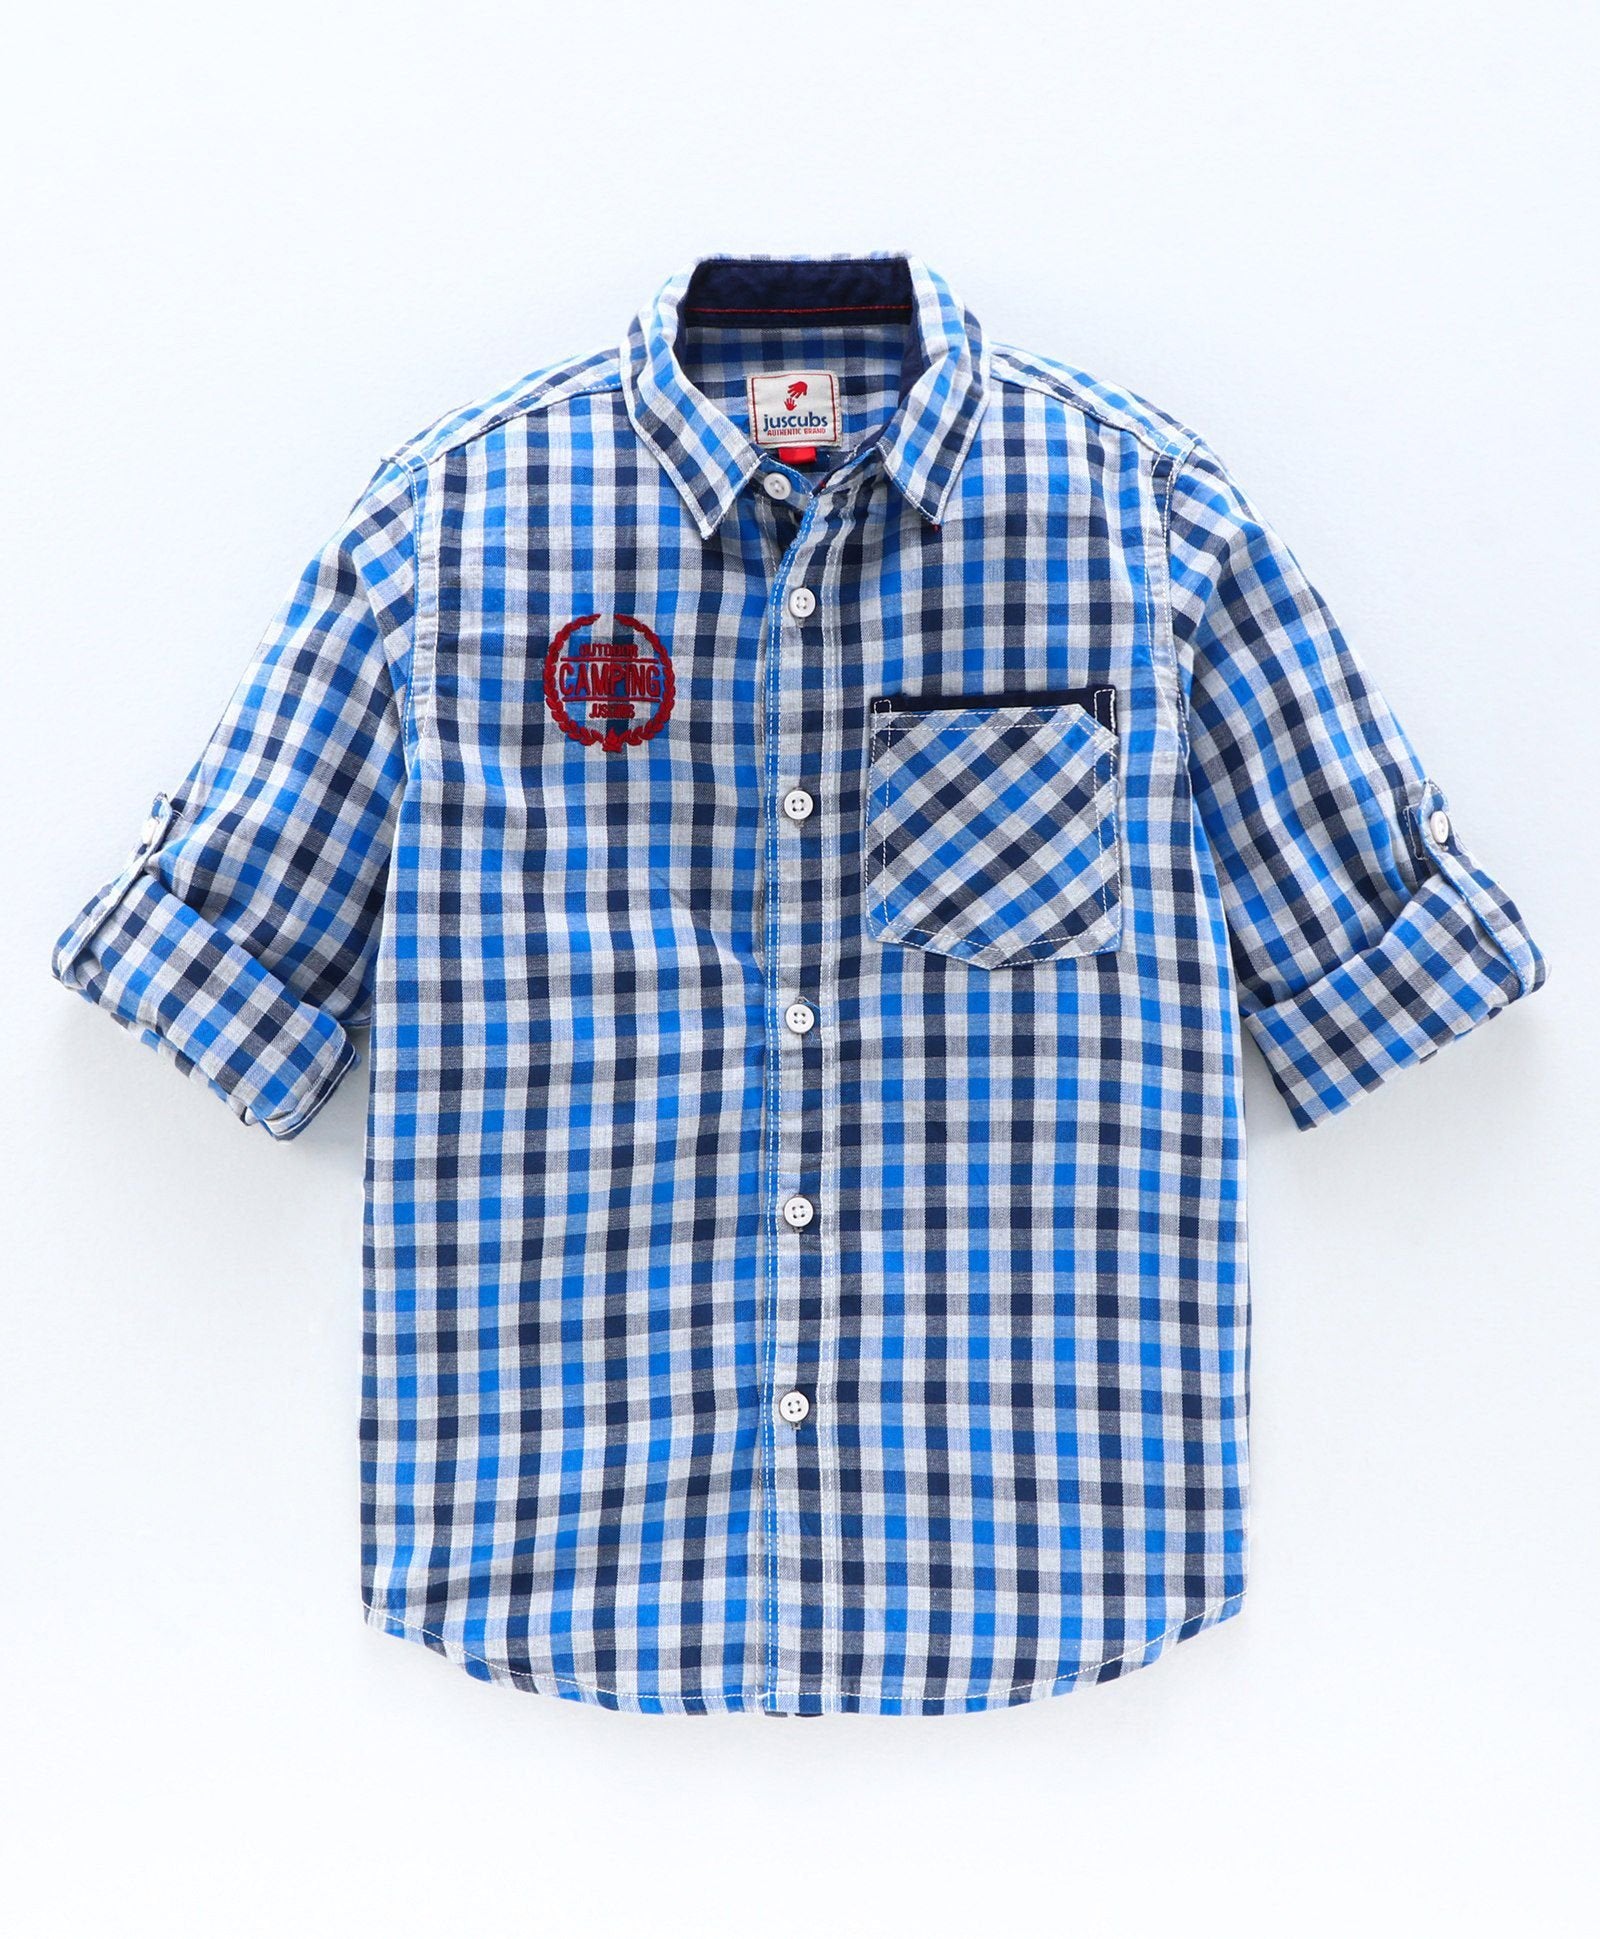 Roll Up Full Sleeve Checkered Bio Wash Shirt - Blue